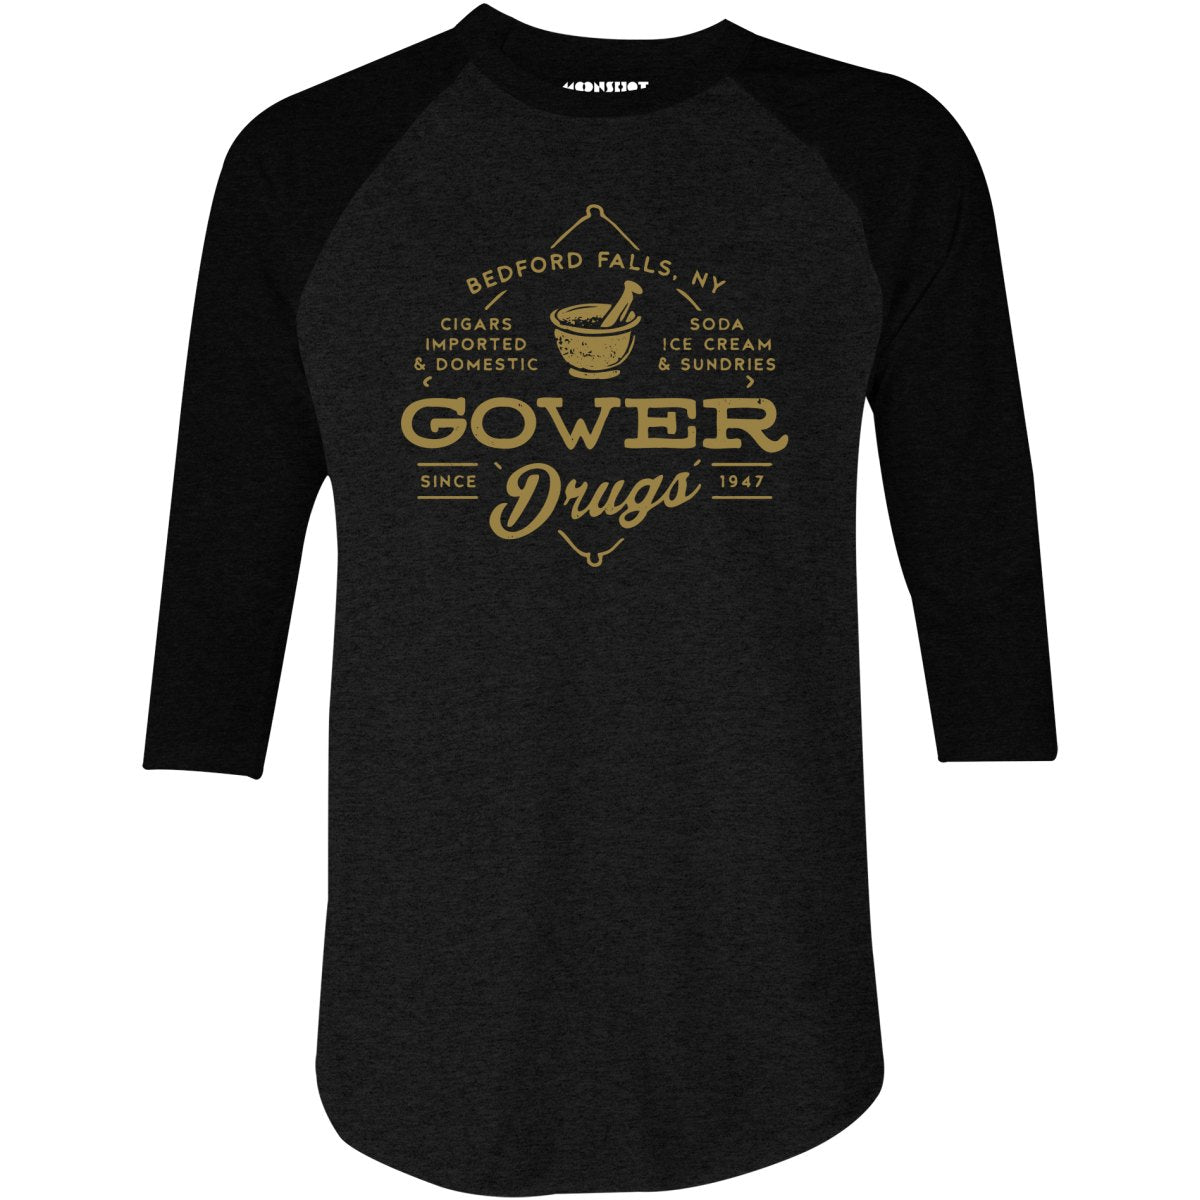 Gower Drugs - Bedford Falls, NY - 3/4 Sleeve Raglan T-Shirt